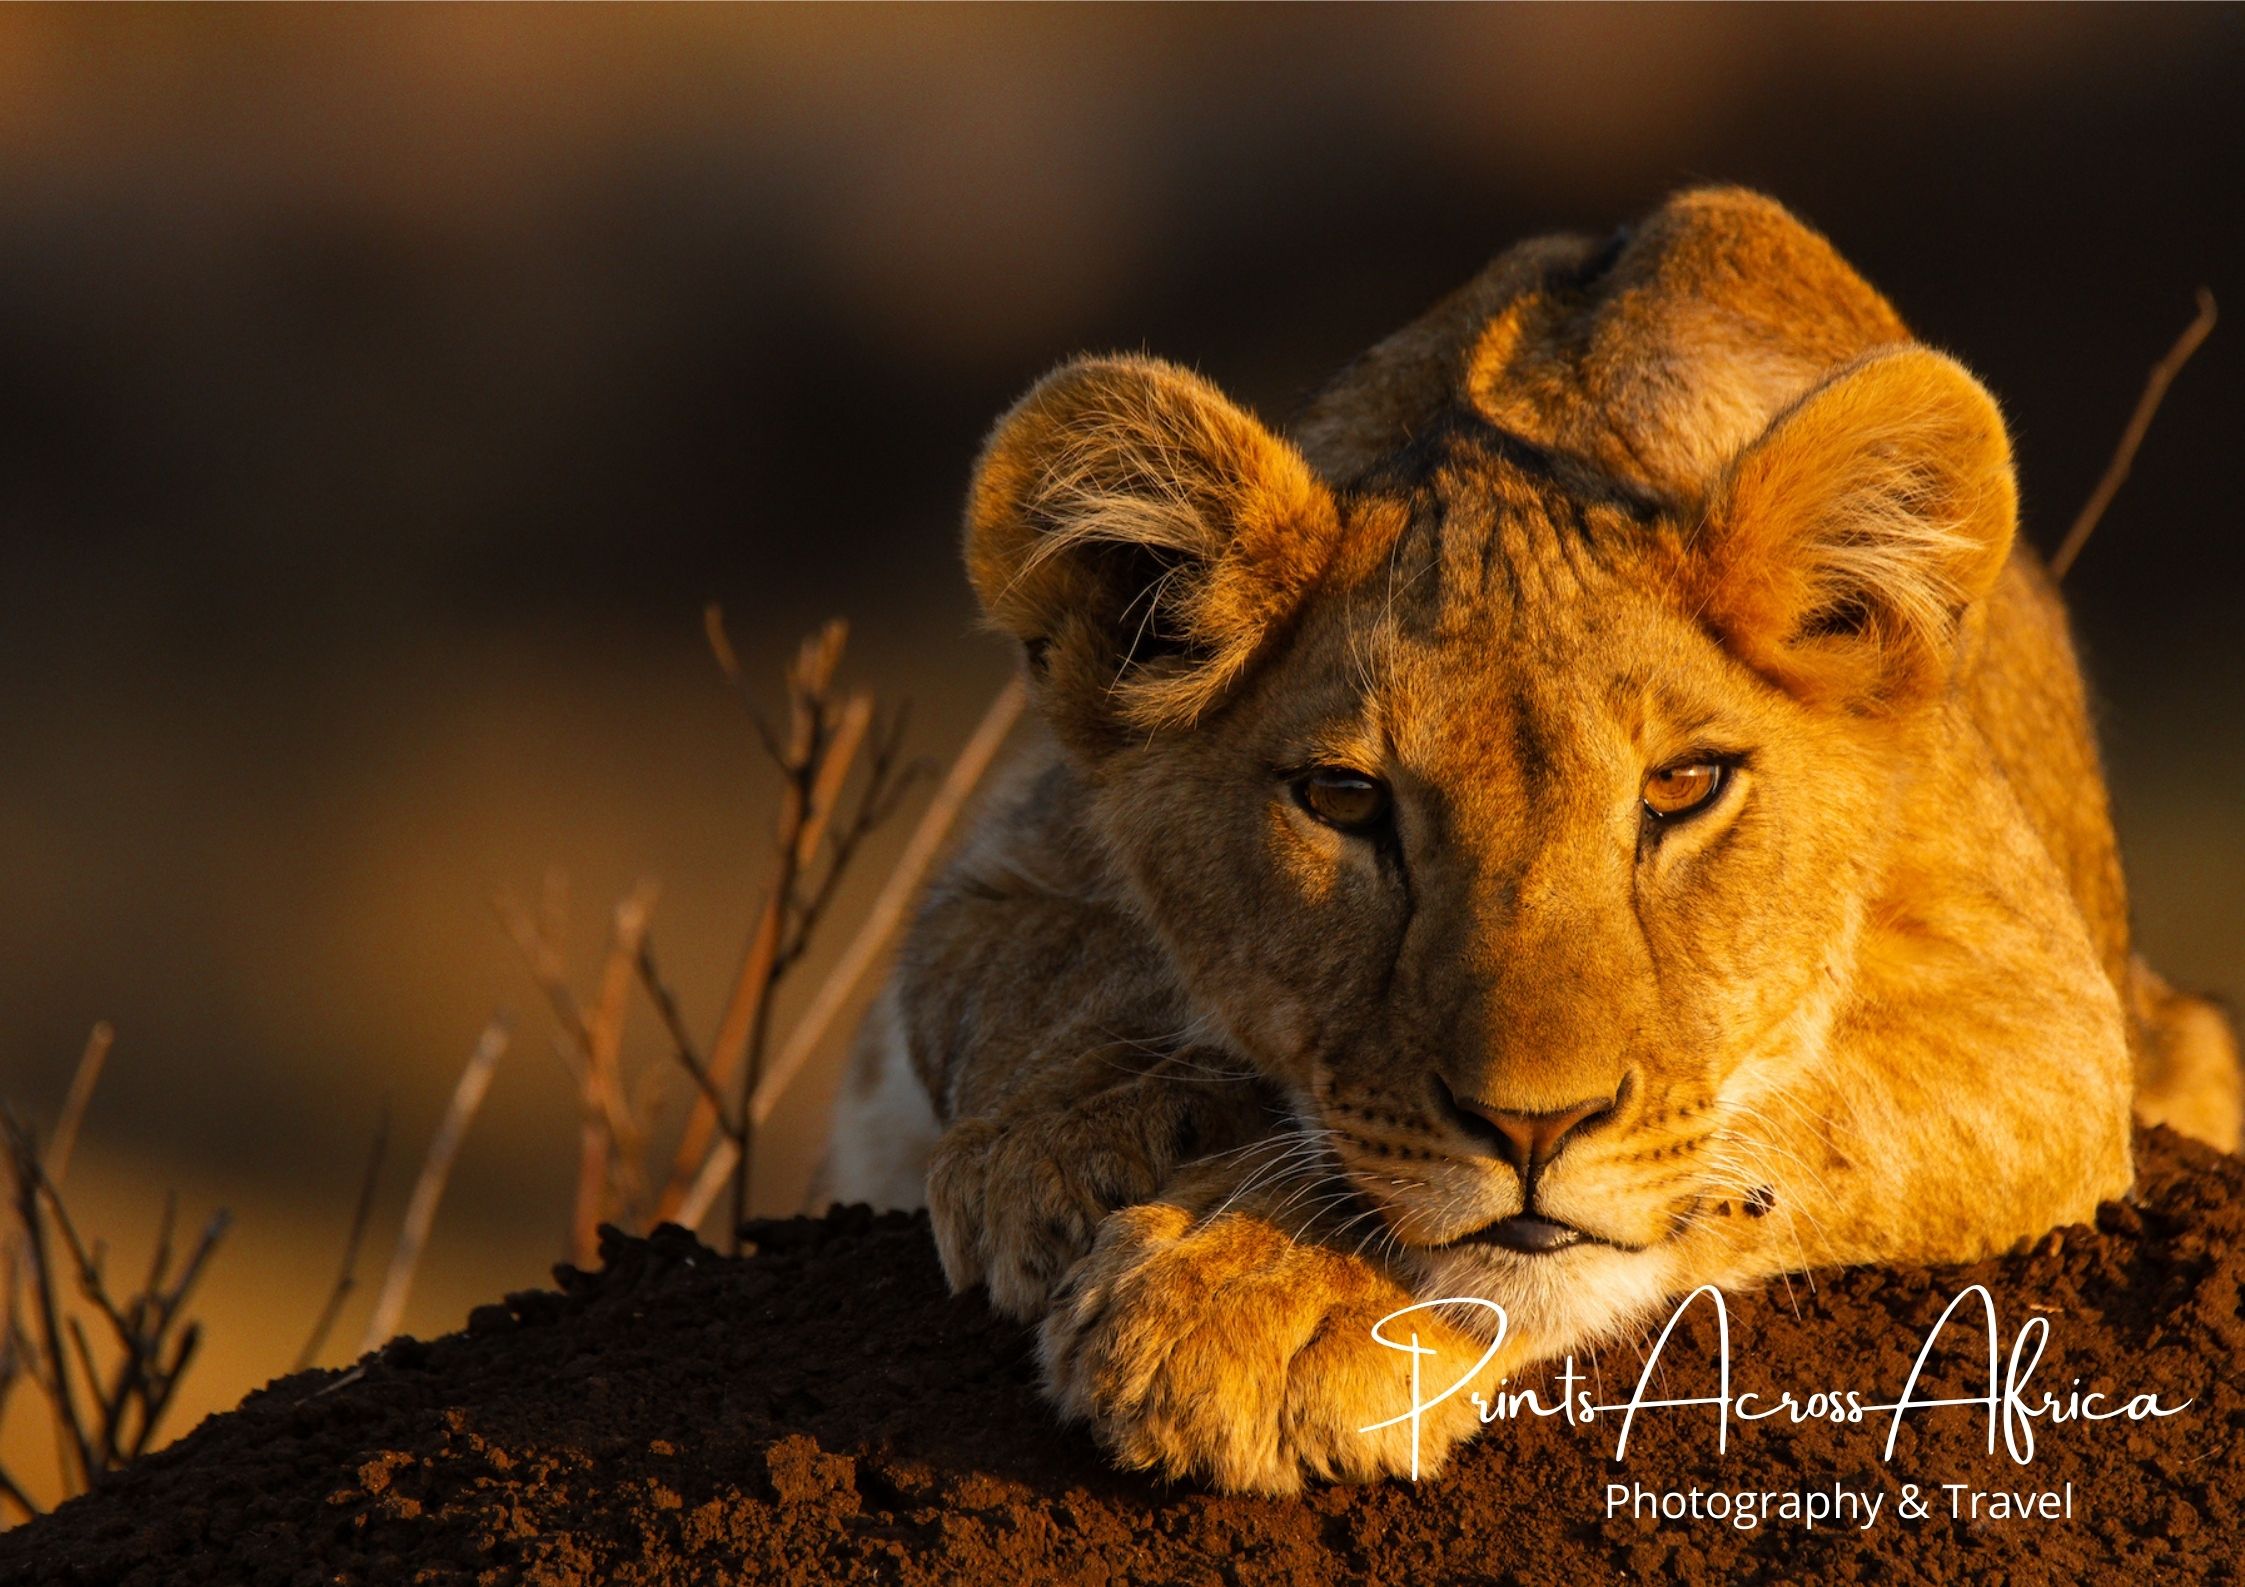 A lion cub on a termite mound